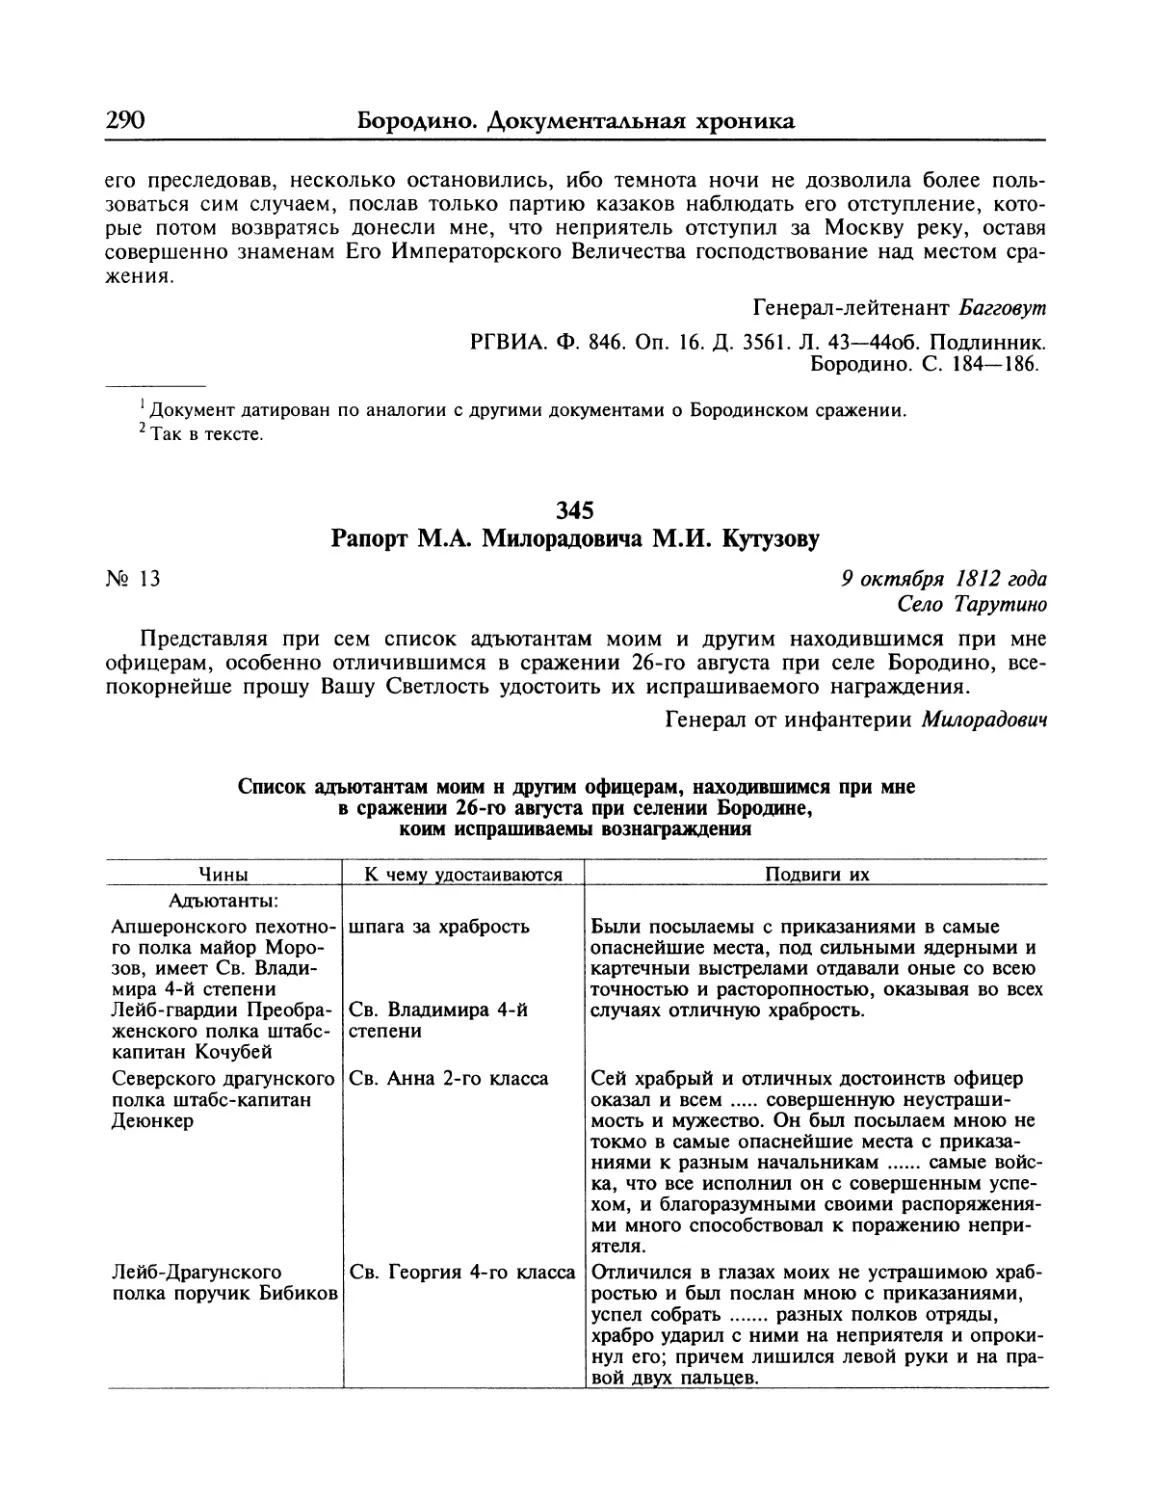 Рапорт М.А.Милорадовича М.И.Кутузову